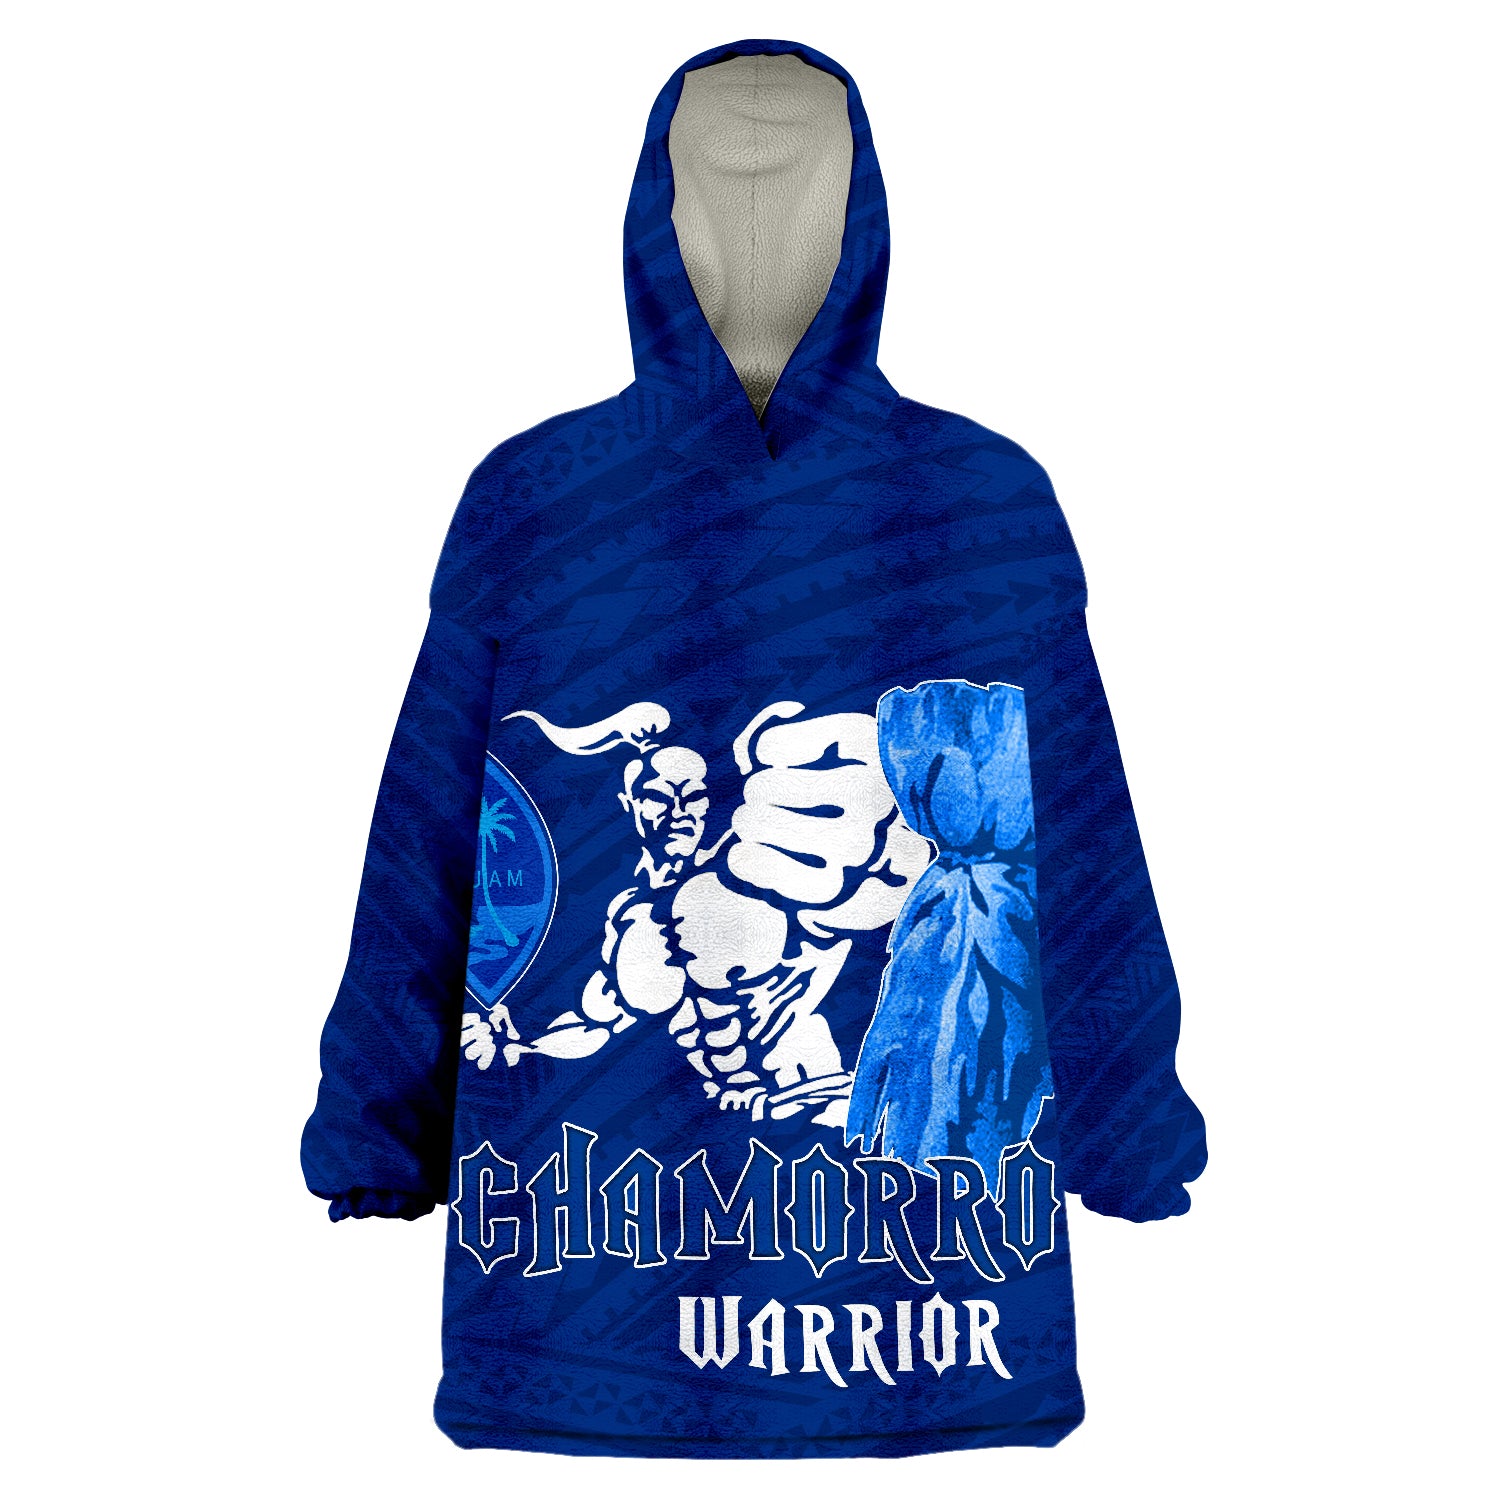 Guam Chamorro Warrior Wearable Blanket Hoodie LT9 Unisex One Size - Polynesian Pride